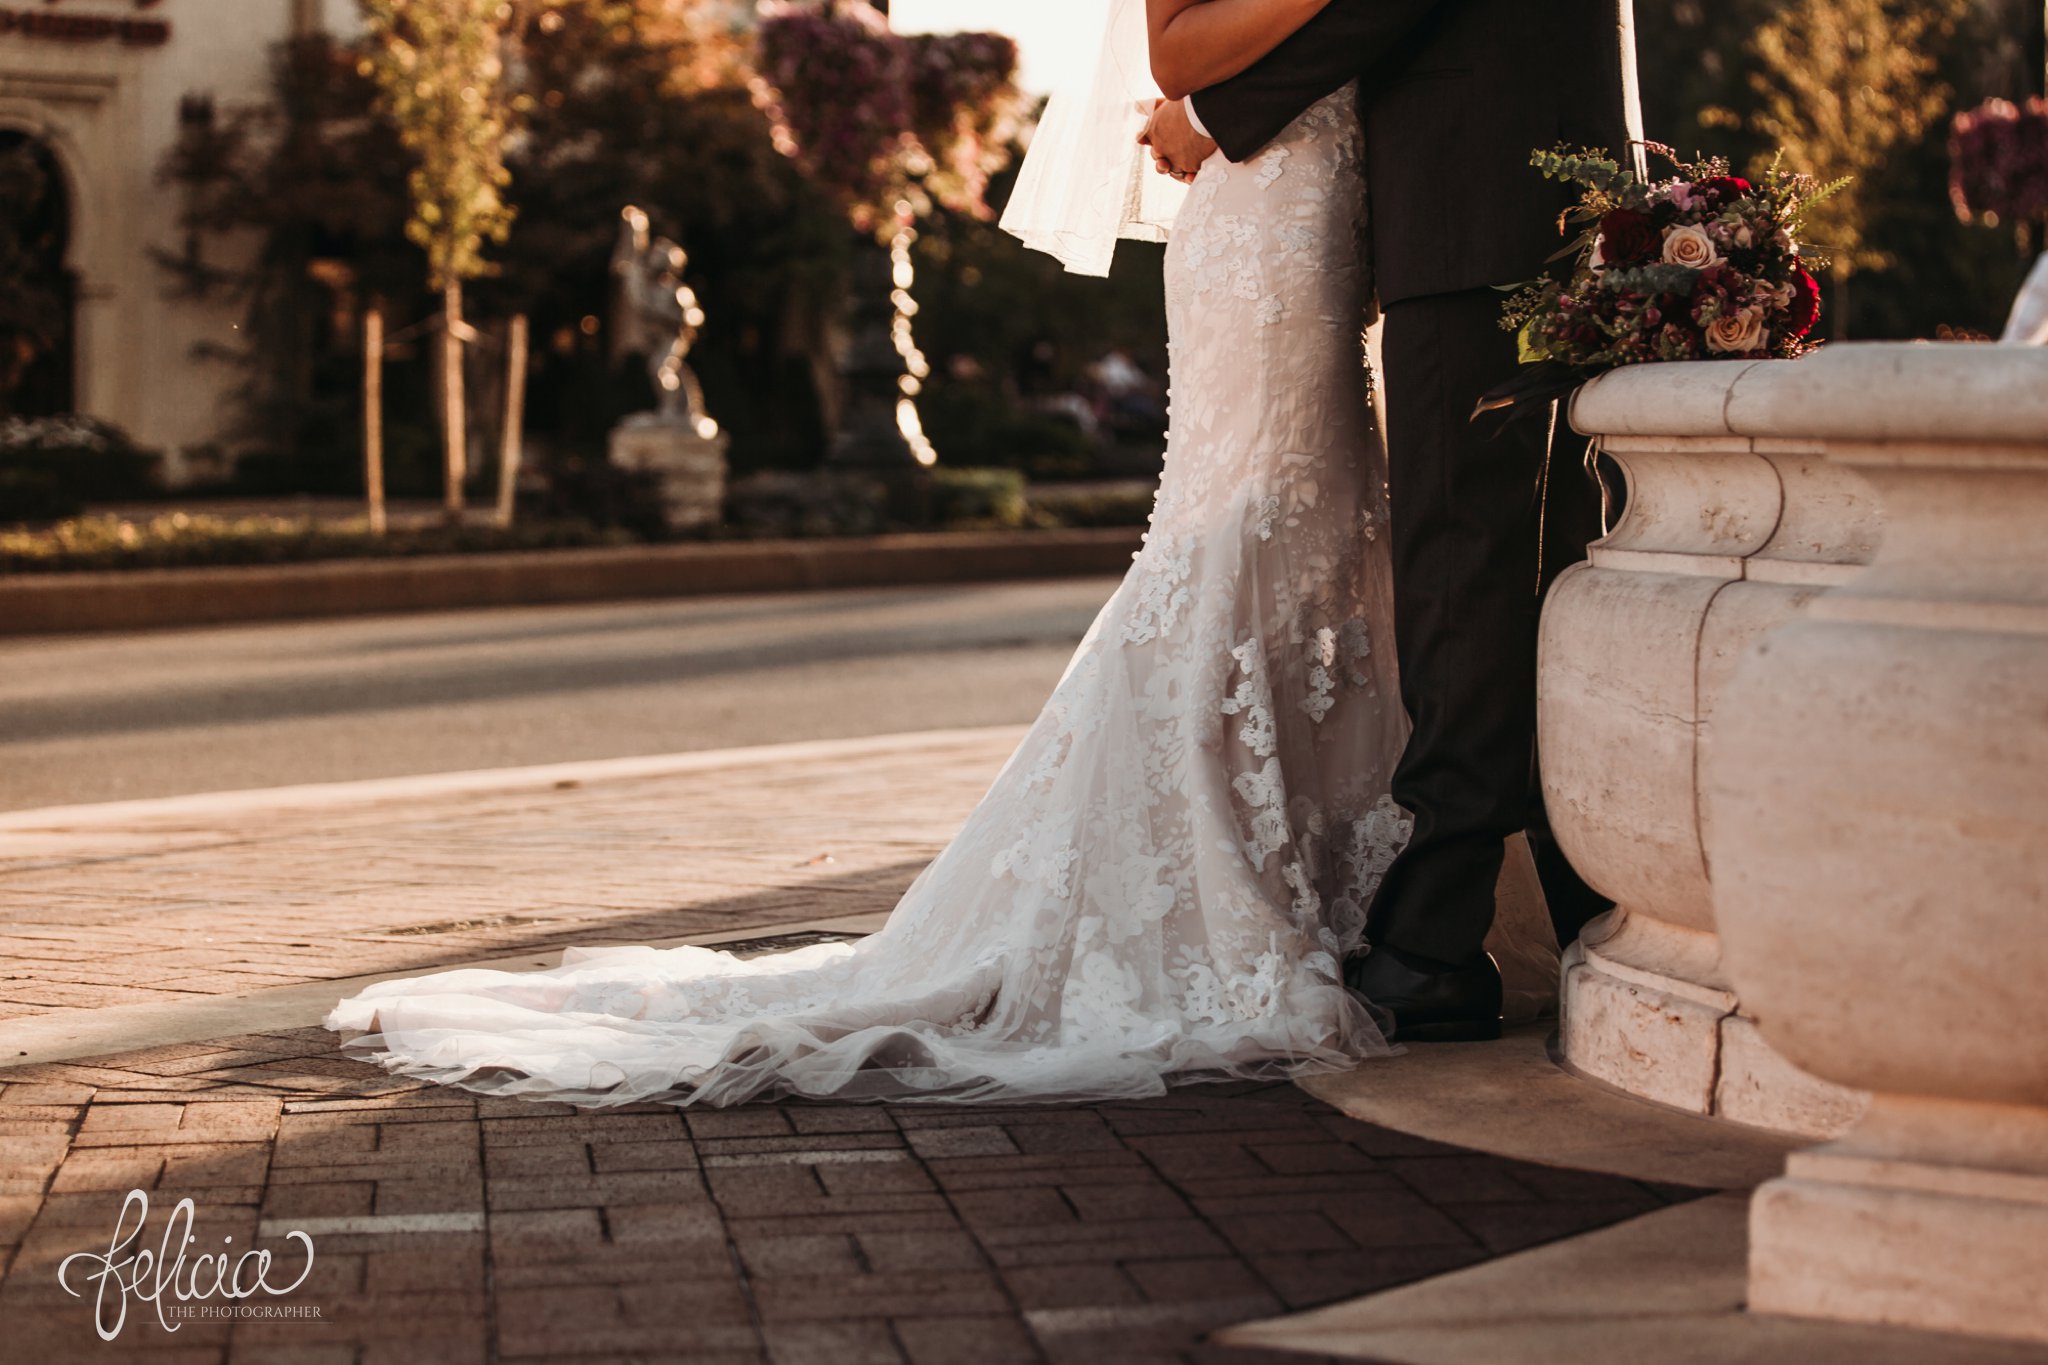 images by feliciathephotographer.com | wedding photographer | kansas city | emily hart | lace floral train | the black tux | golden hour | sunset | grey suit | romantic | plaza fountains | 